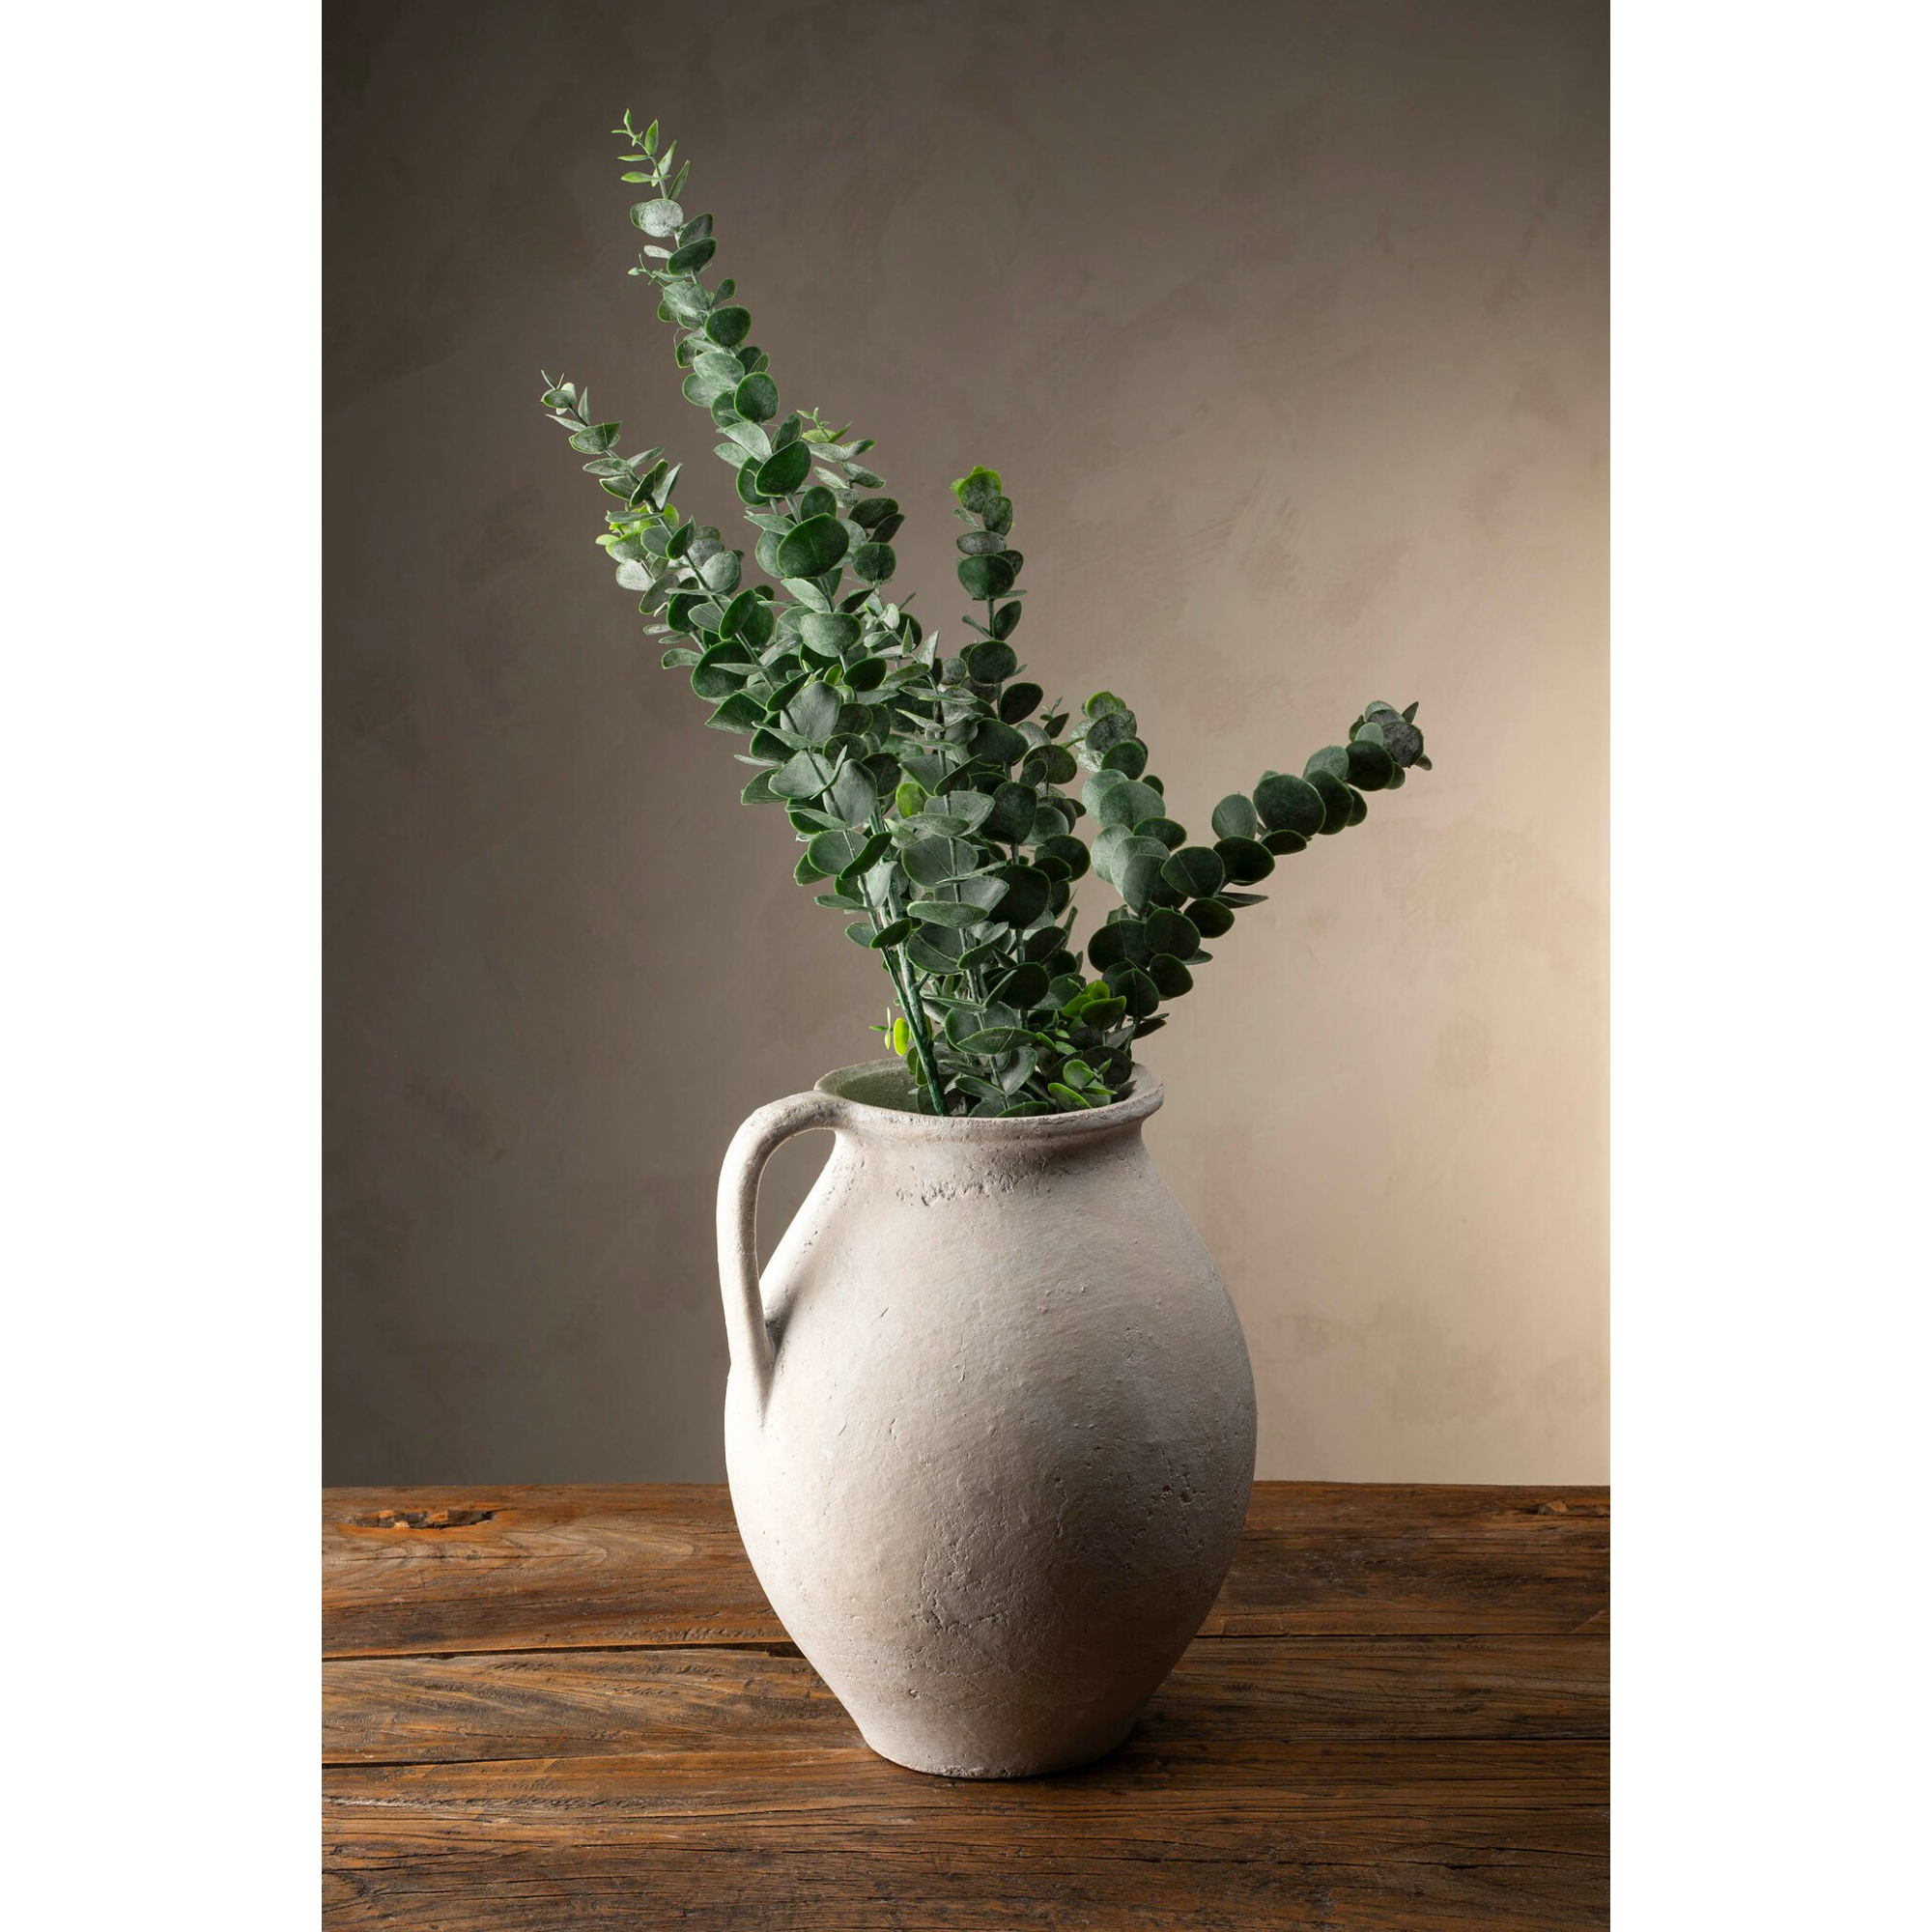 Eucalyptus Stems in a Vase